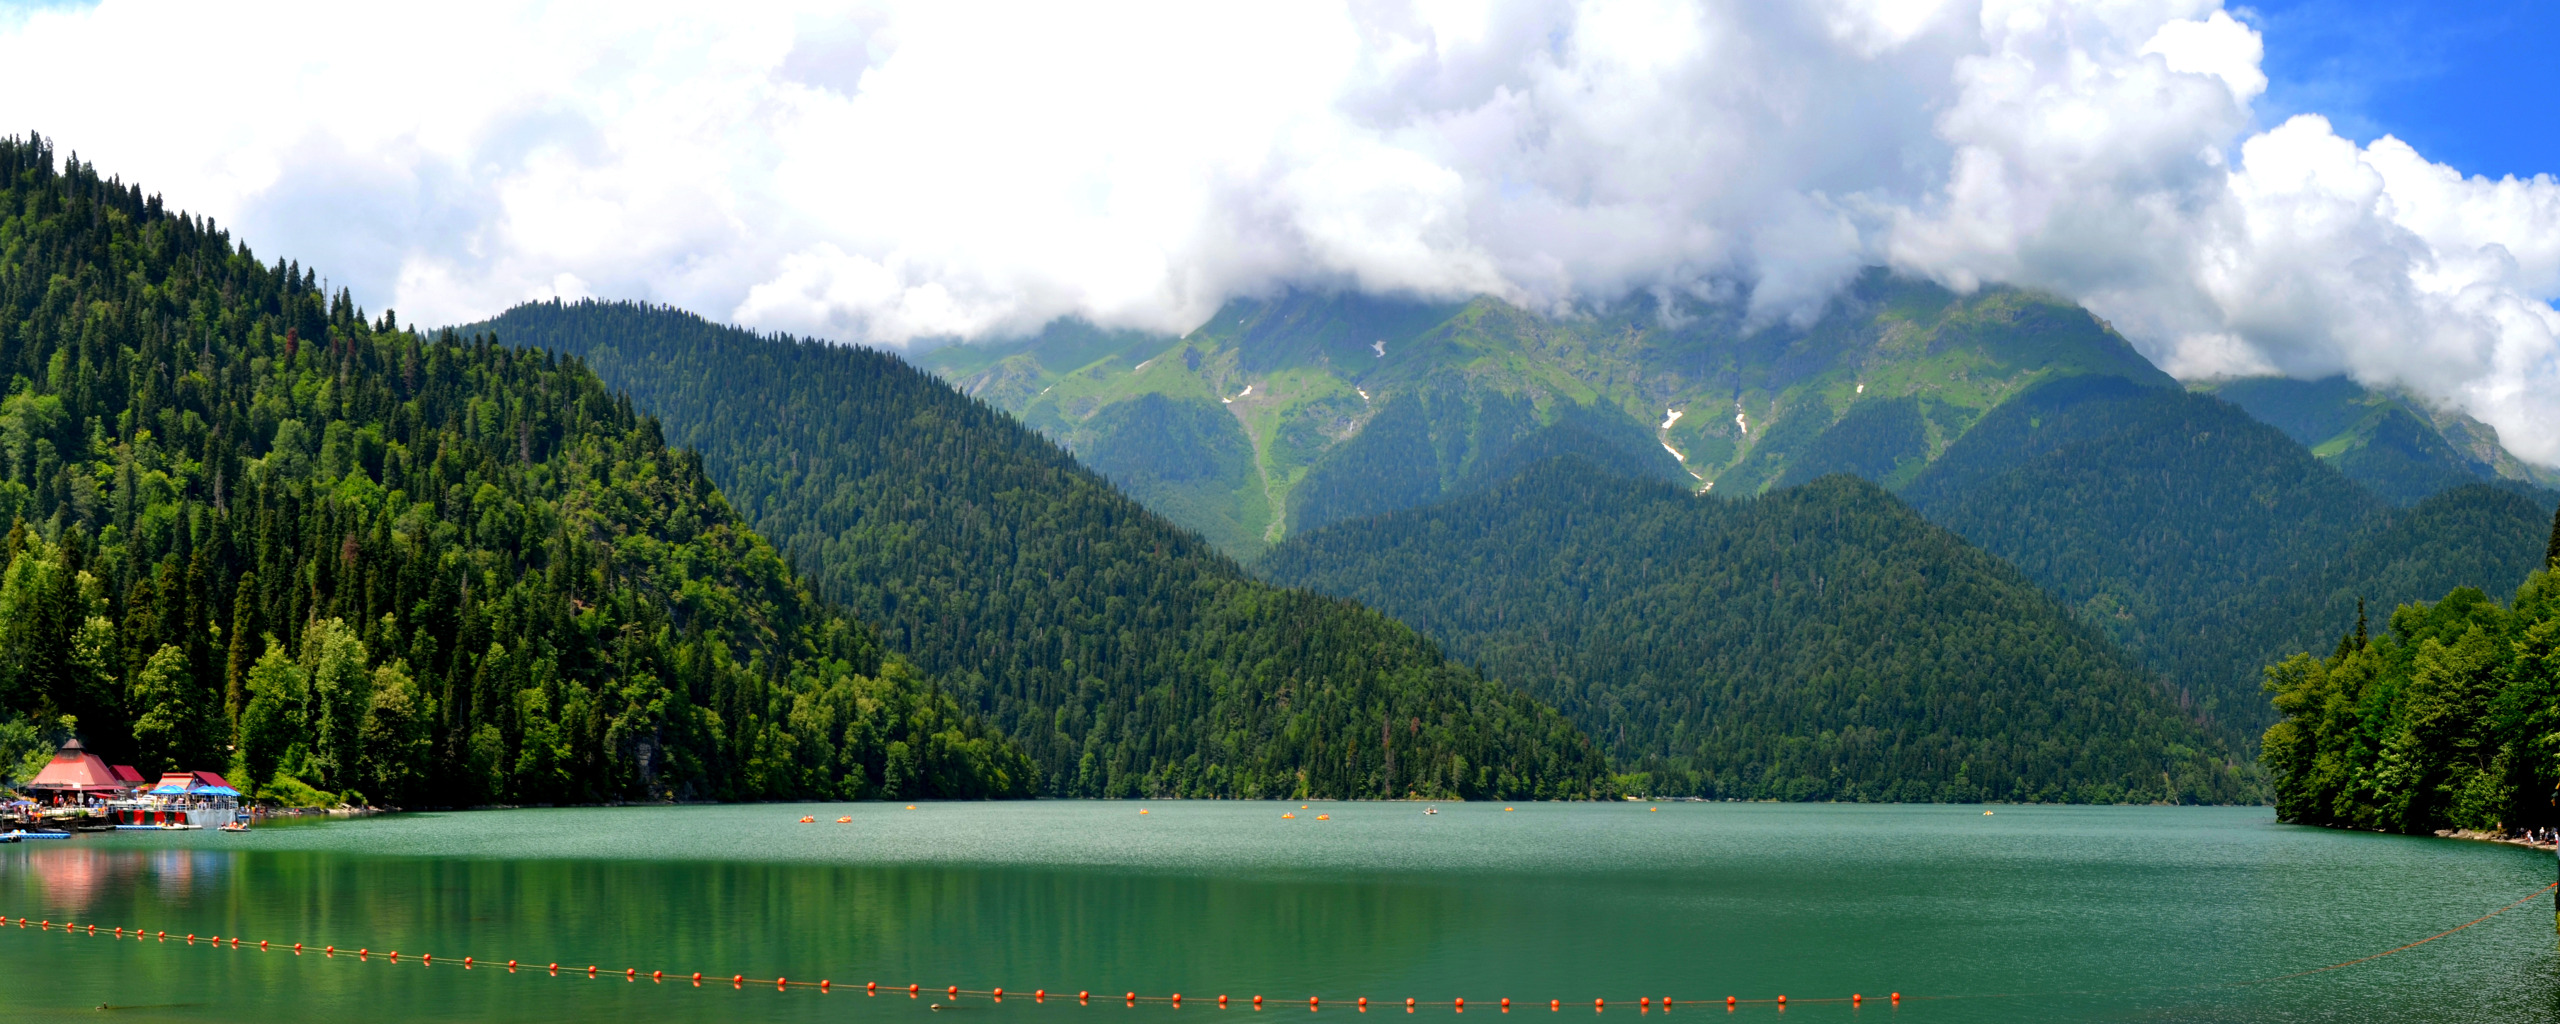 Озеро Рица Абхазия. Времена года абхазия